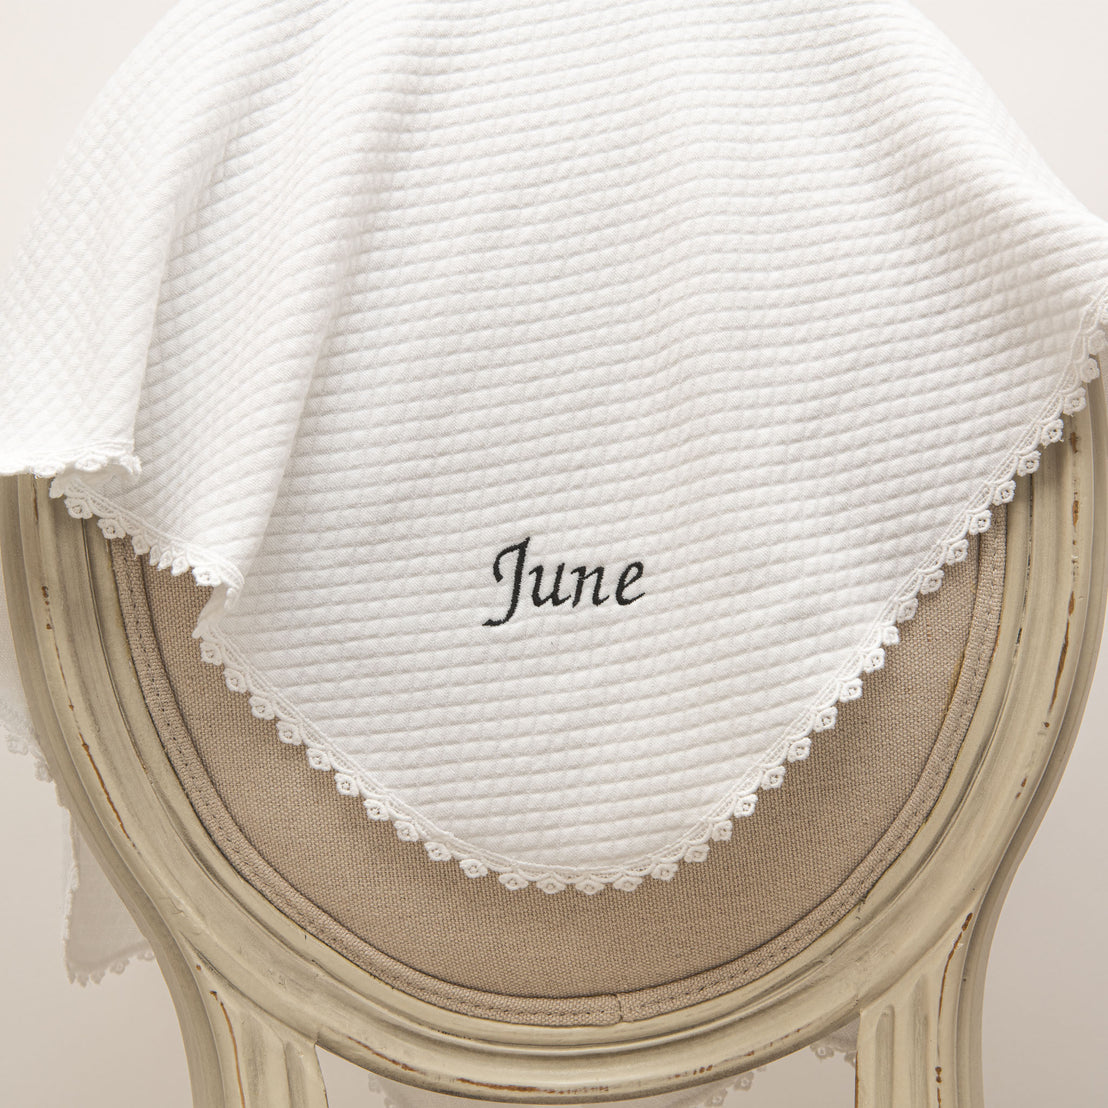 June Personalized Blanket